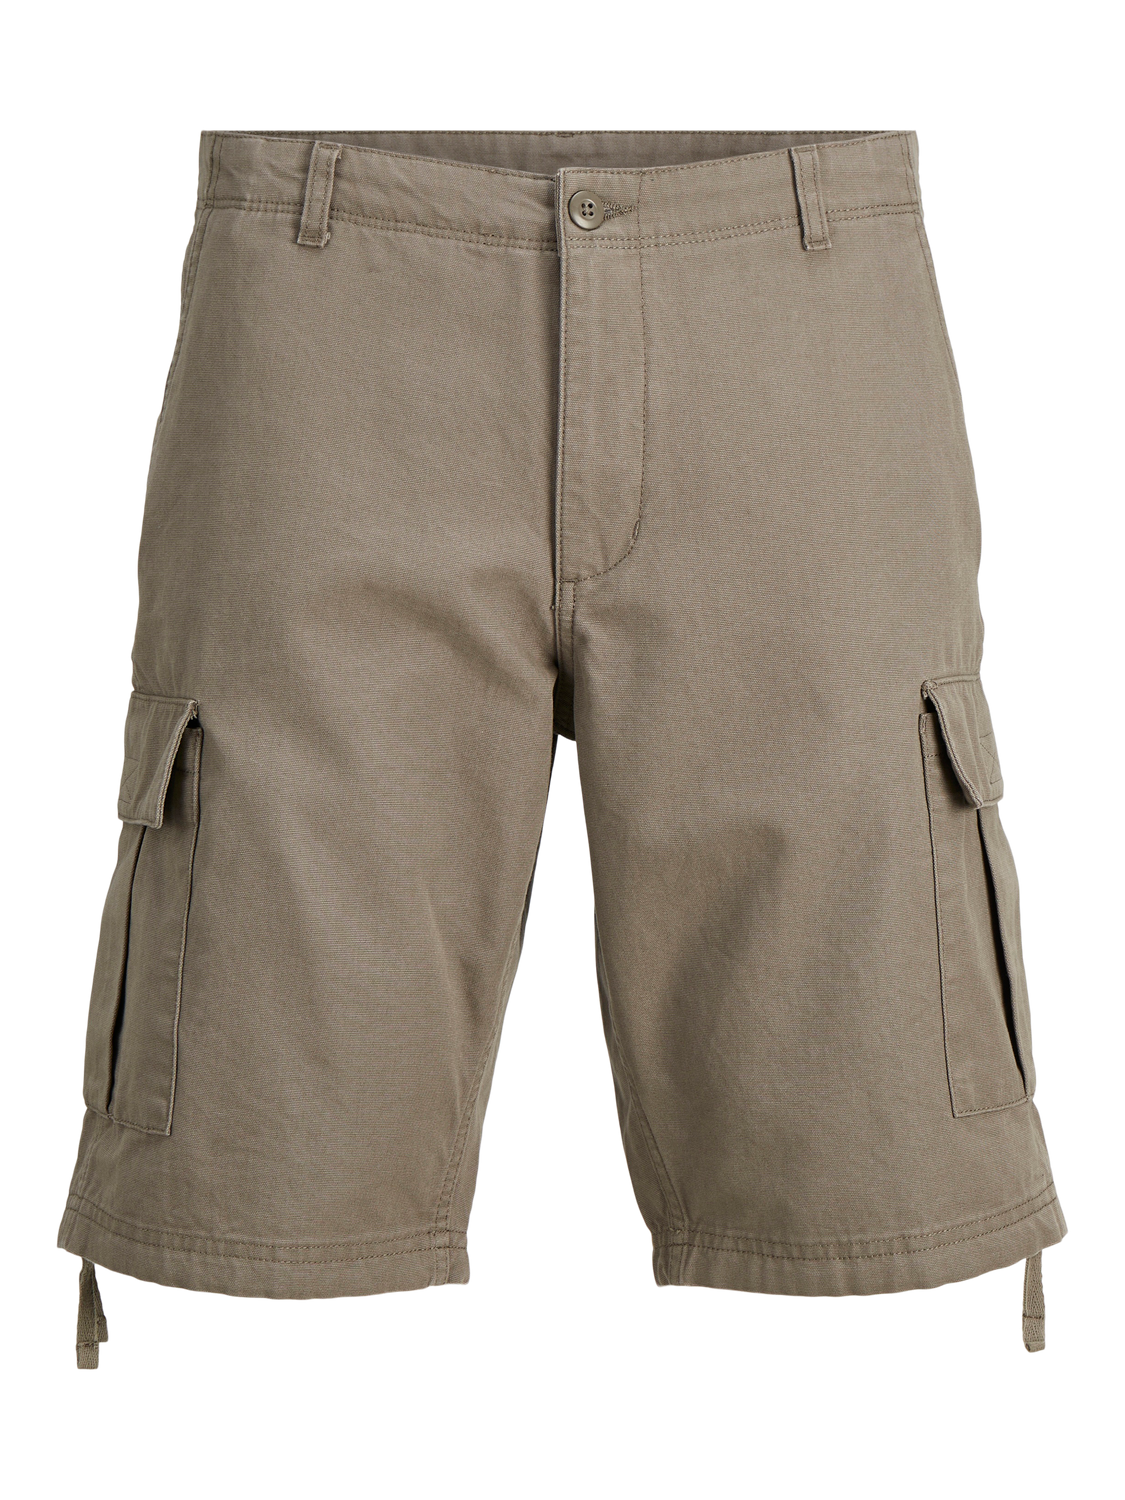 JPSTCOLE Shorts - Bungee Cord